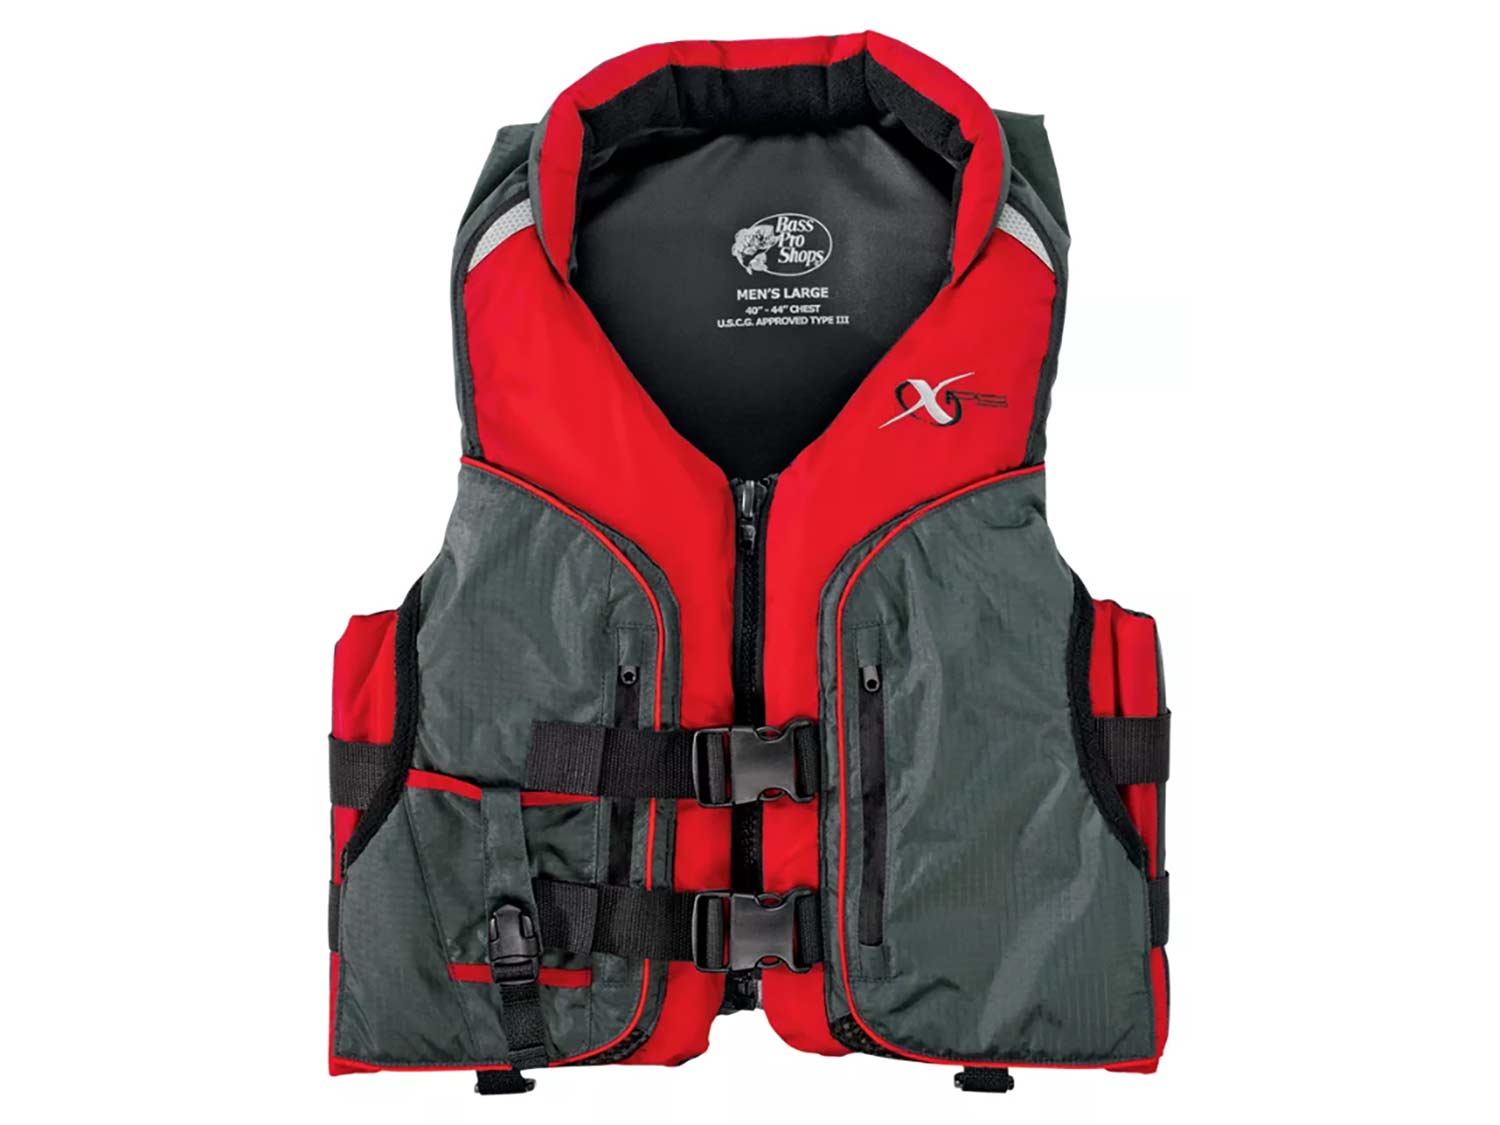 XPS Deluxe Fishing Life Vest